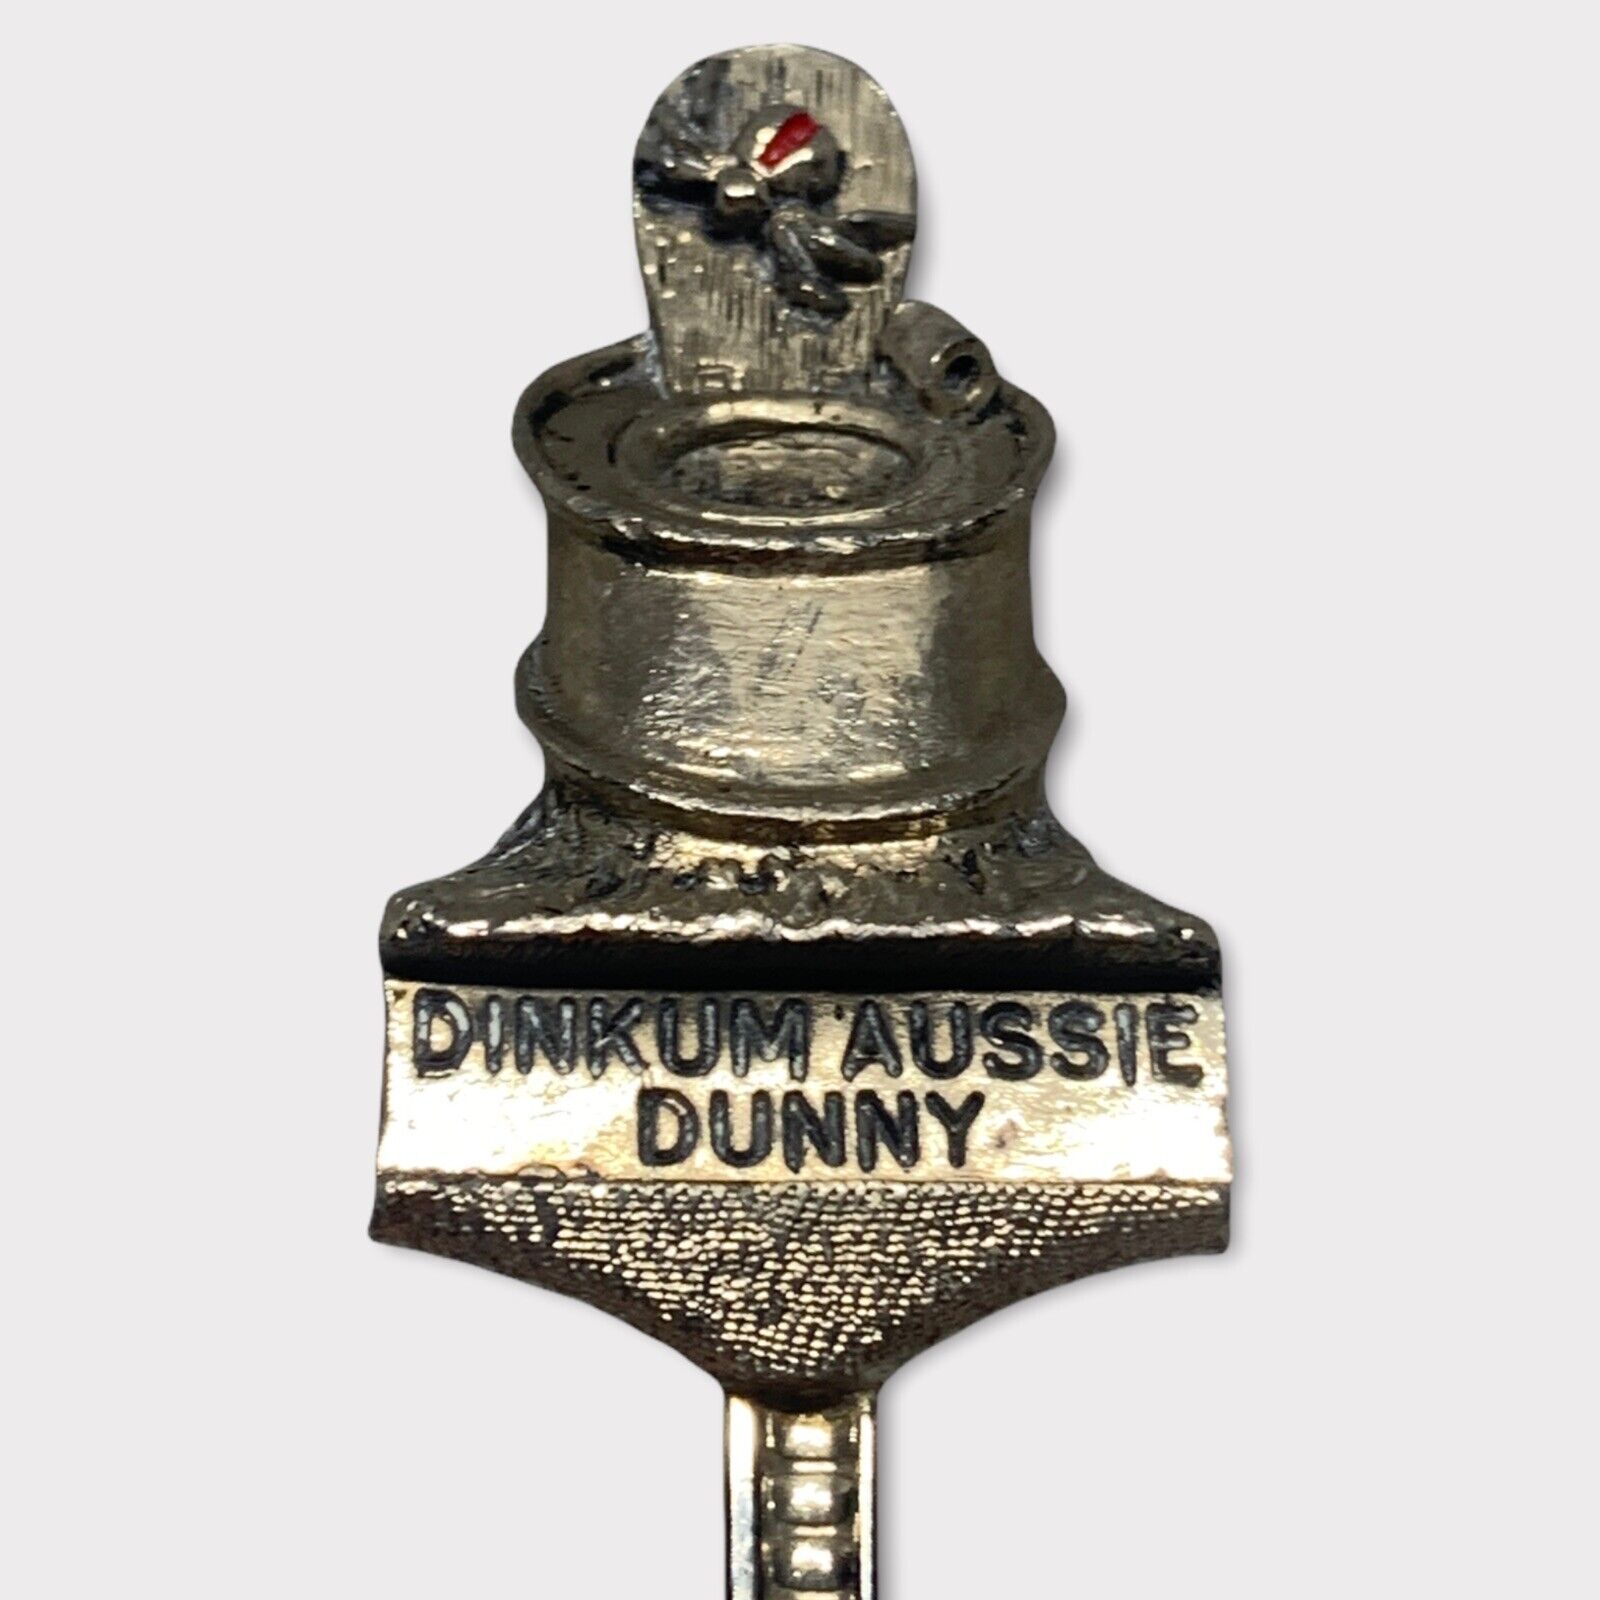 Vintage Souvenir Spoon - Dinkum Aussie Dunny - Silver Plated